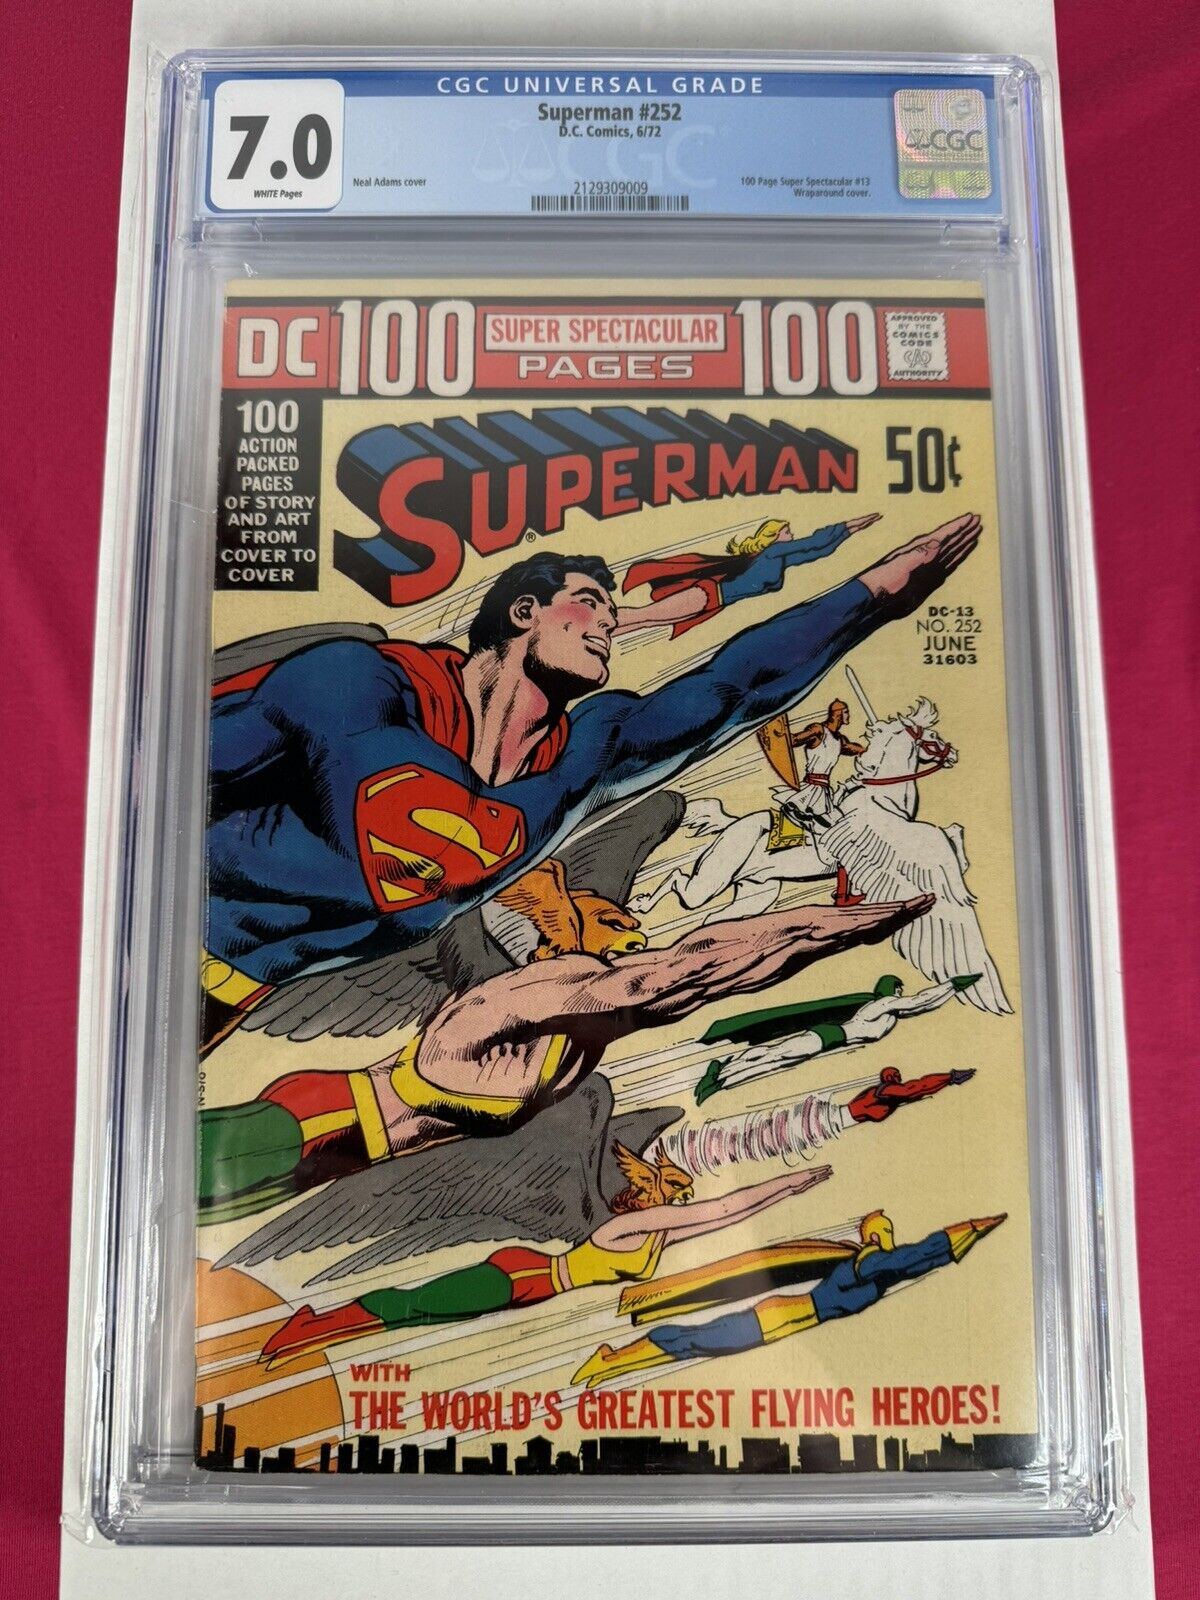 SUPERMAN #252 CGC 7.0 NEAL ADAMS wraparound cover 100 PAGE SUPER SPECTACULAR 13